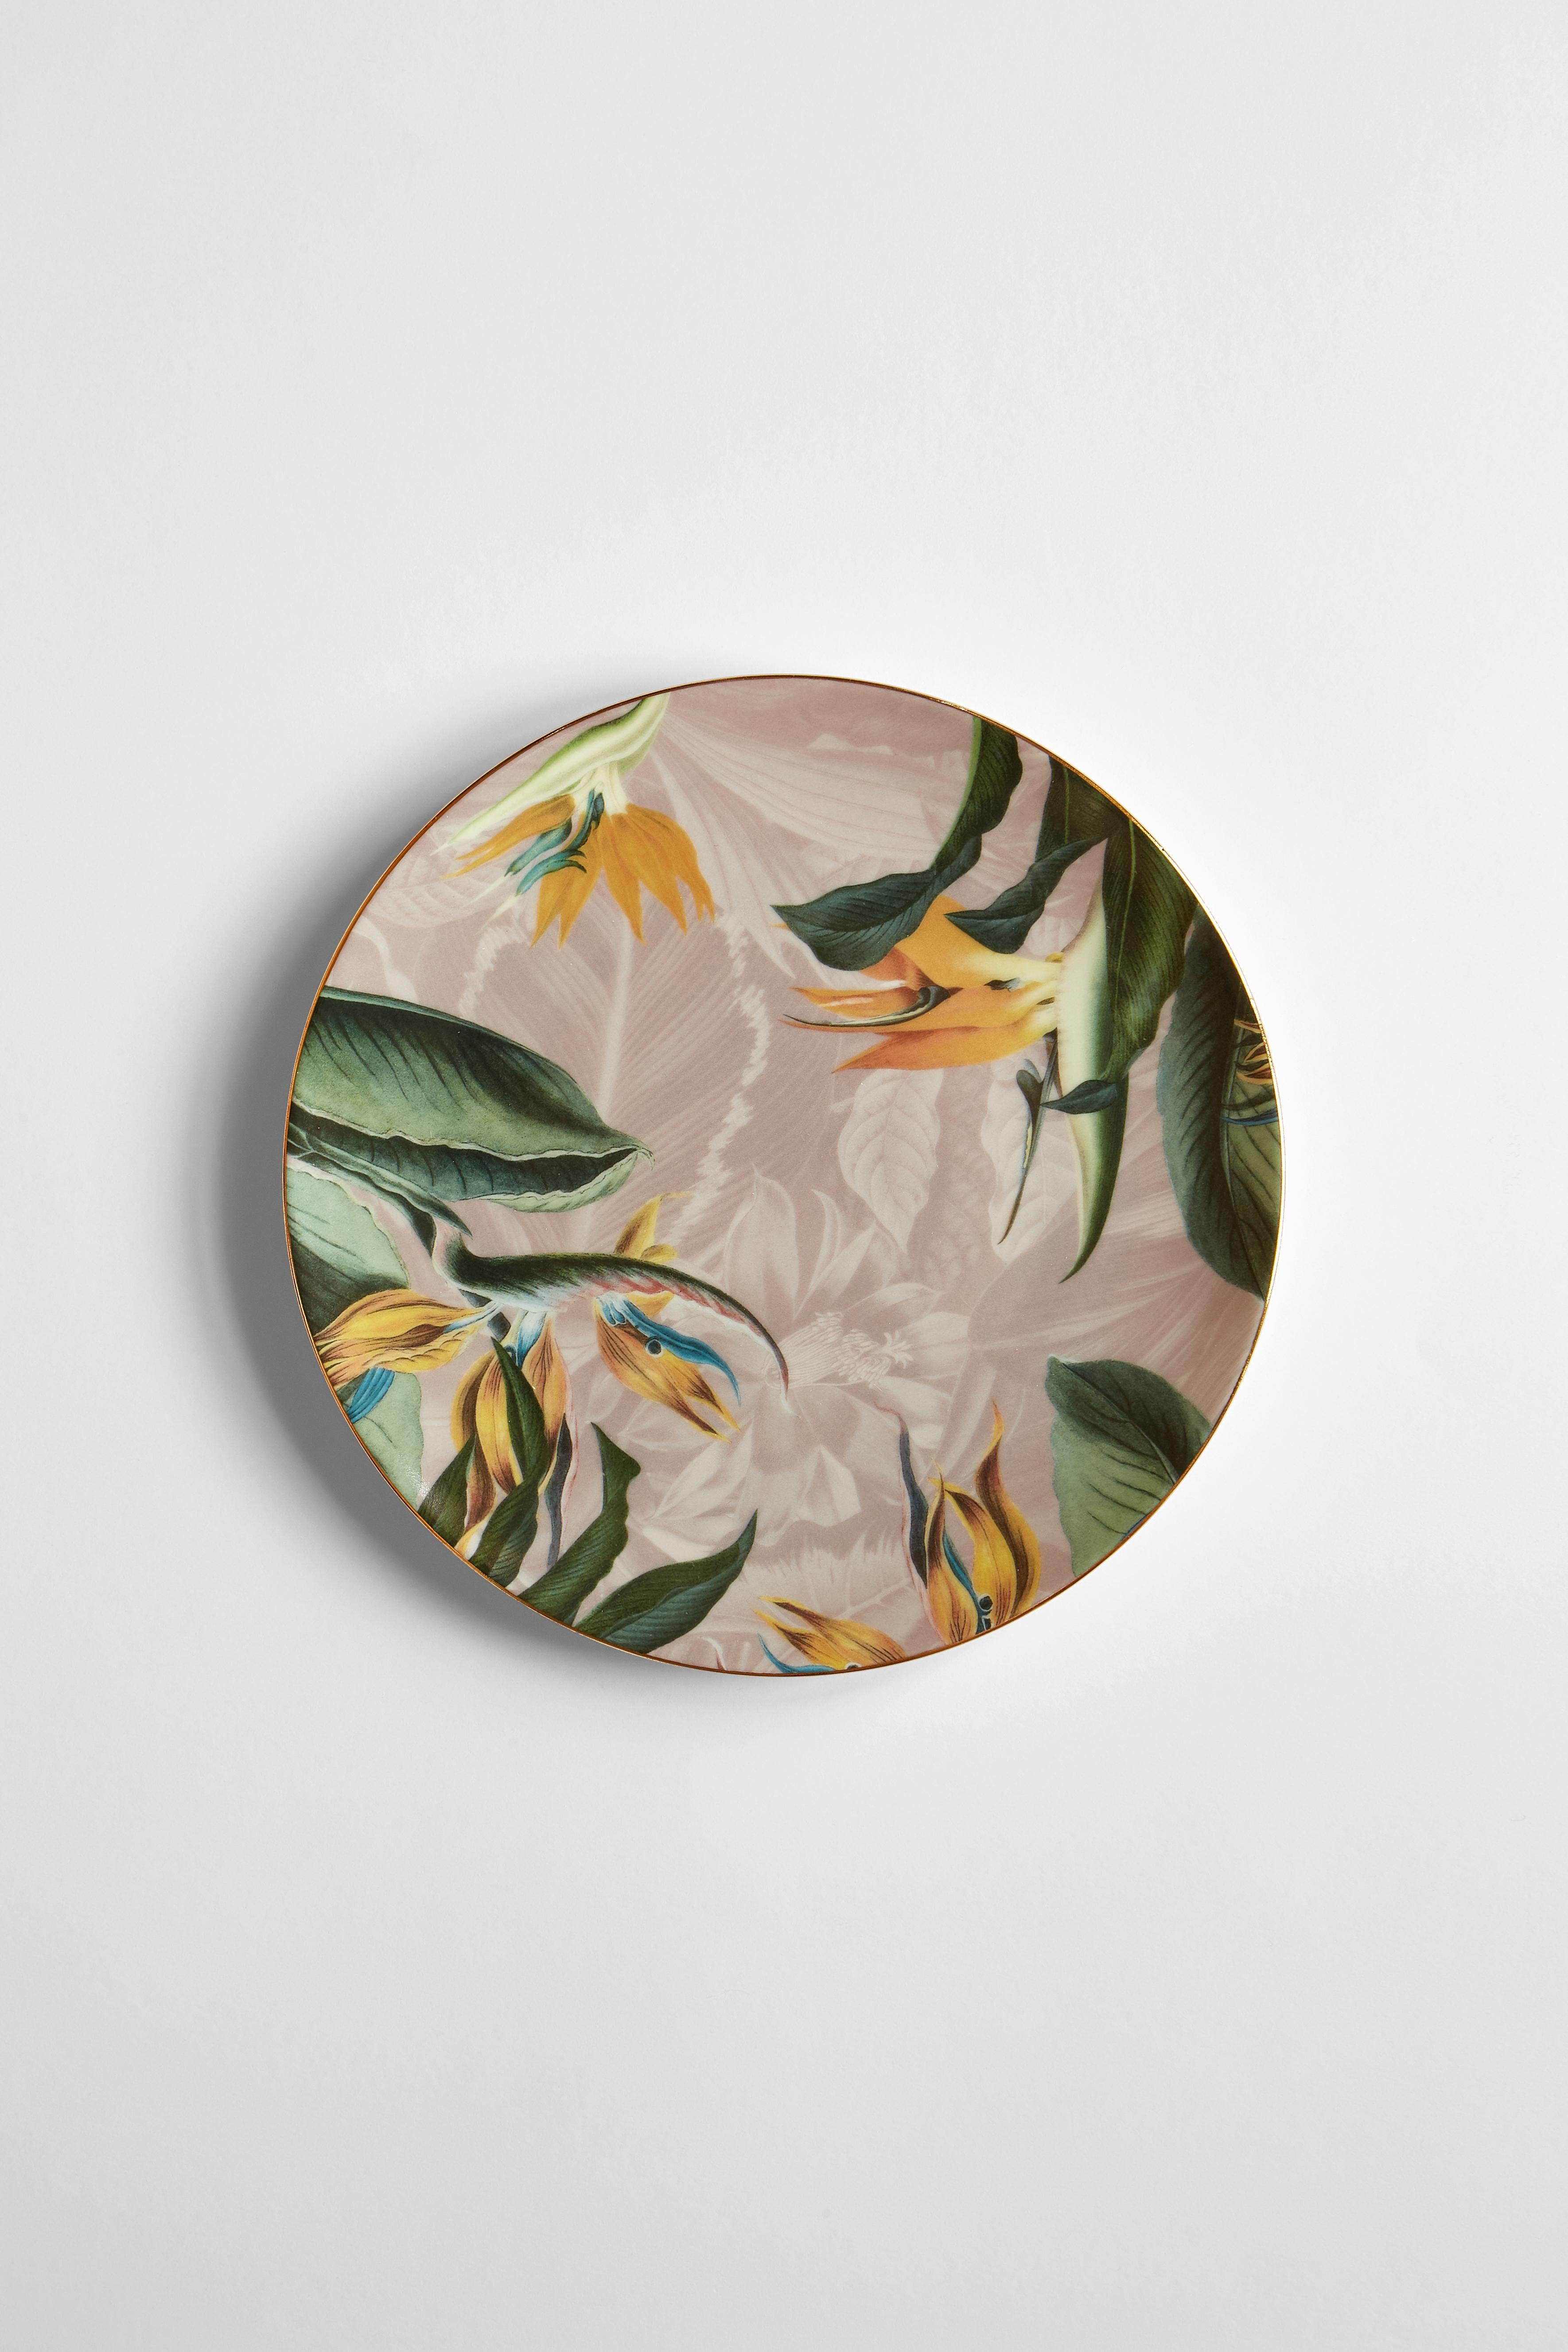 Animalia, Six Contemporary Porcelain Dessert Plates with Decorative Design For Sale 2